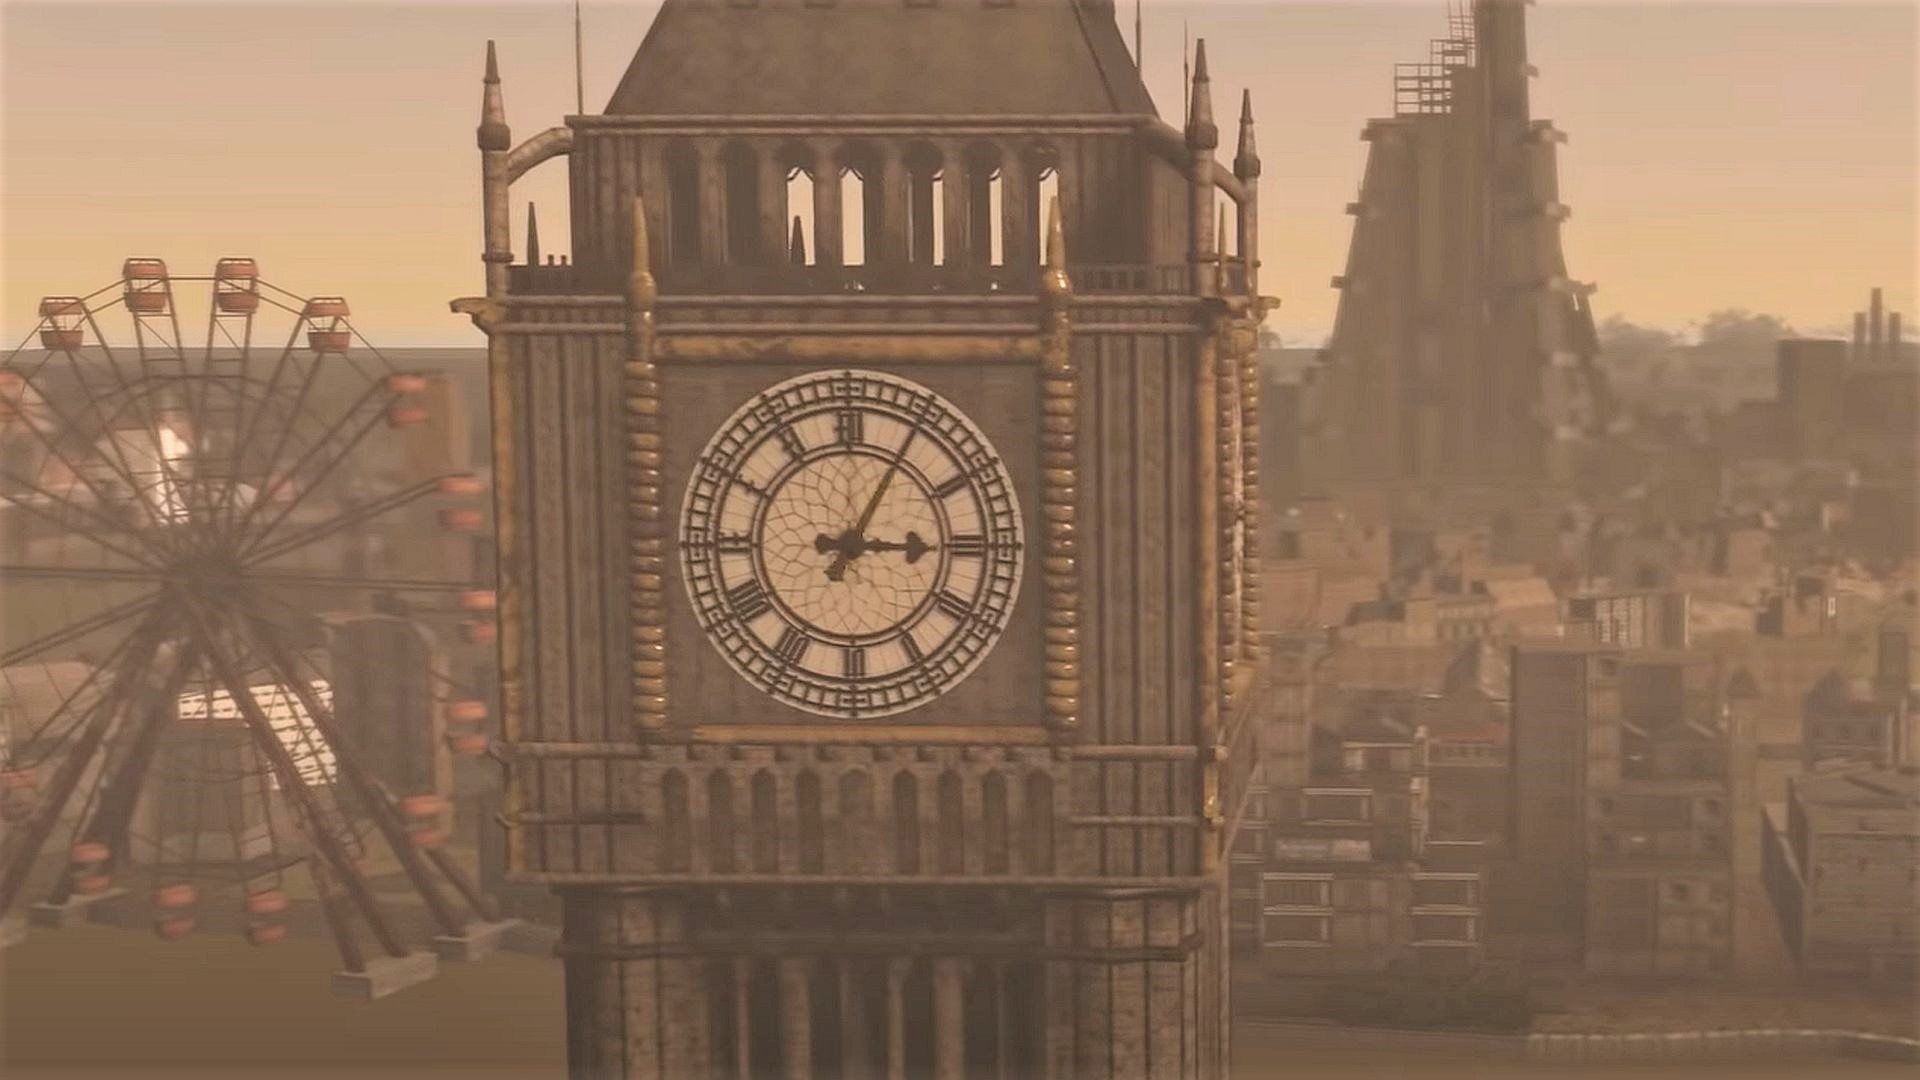 Fallout: London modders αποκαλύπτουν ένα πλήθος νέου περιεχομένου για το τεράστιο mod Fallout 4